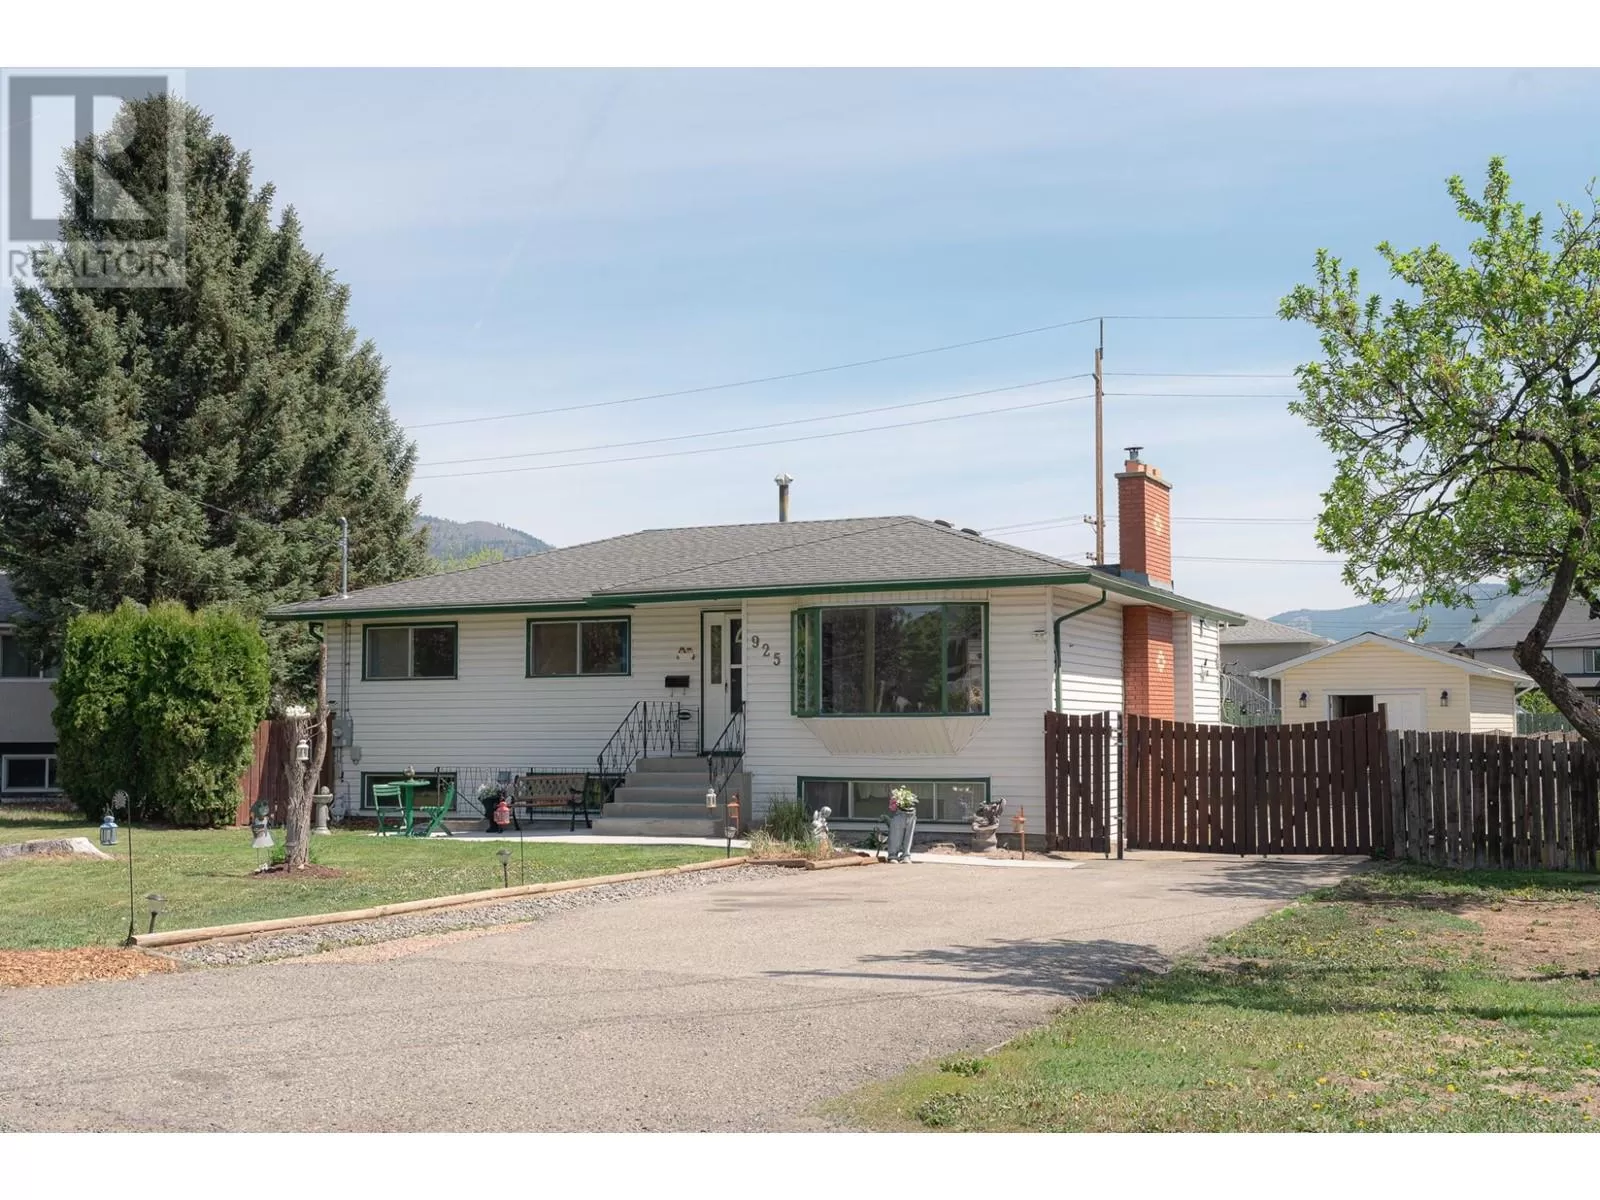 House for rent: 925 Alhambra Drive, Kamloops, British Columbia V2B 4R1